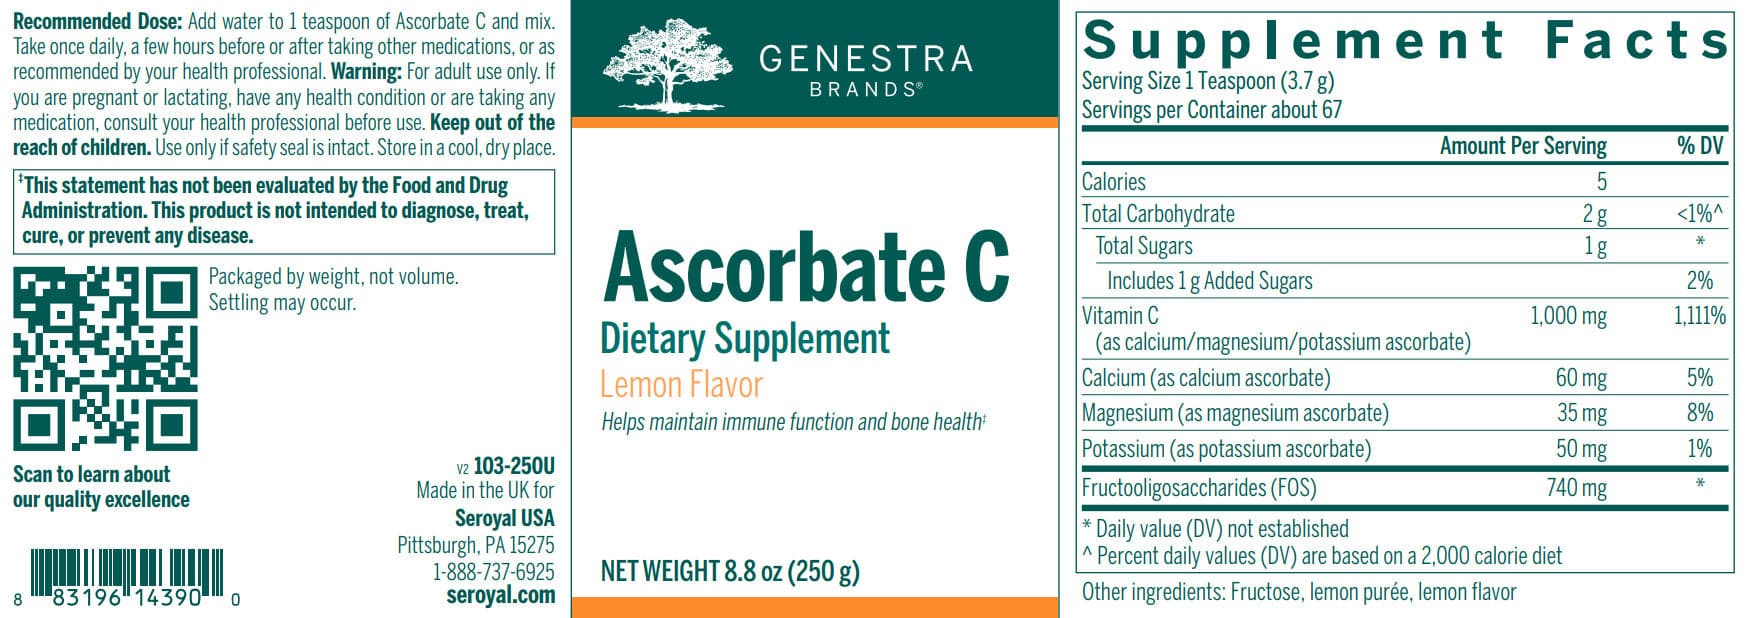 Genestra Brands Ascorbate C Label